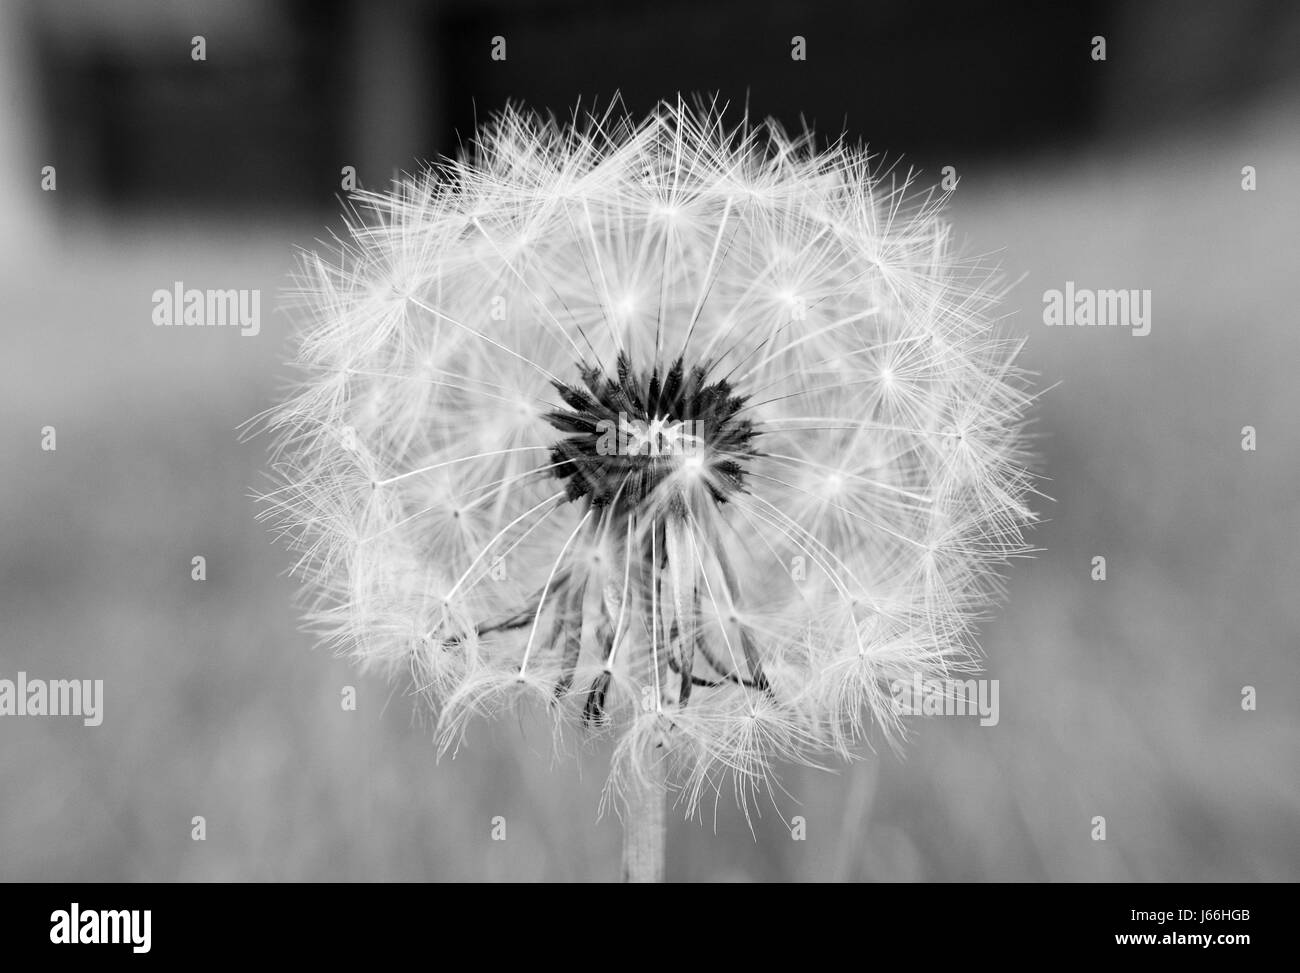 Dandelion Puffball in black and white Stock Photo